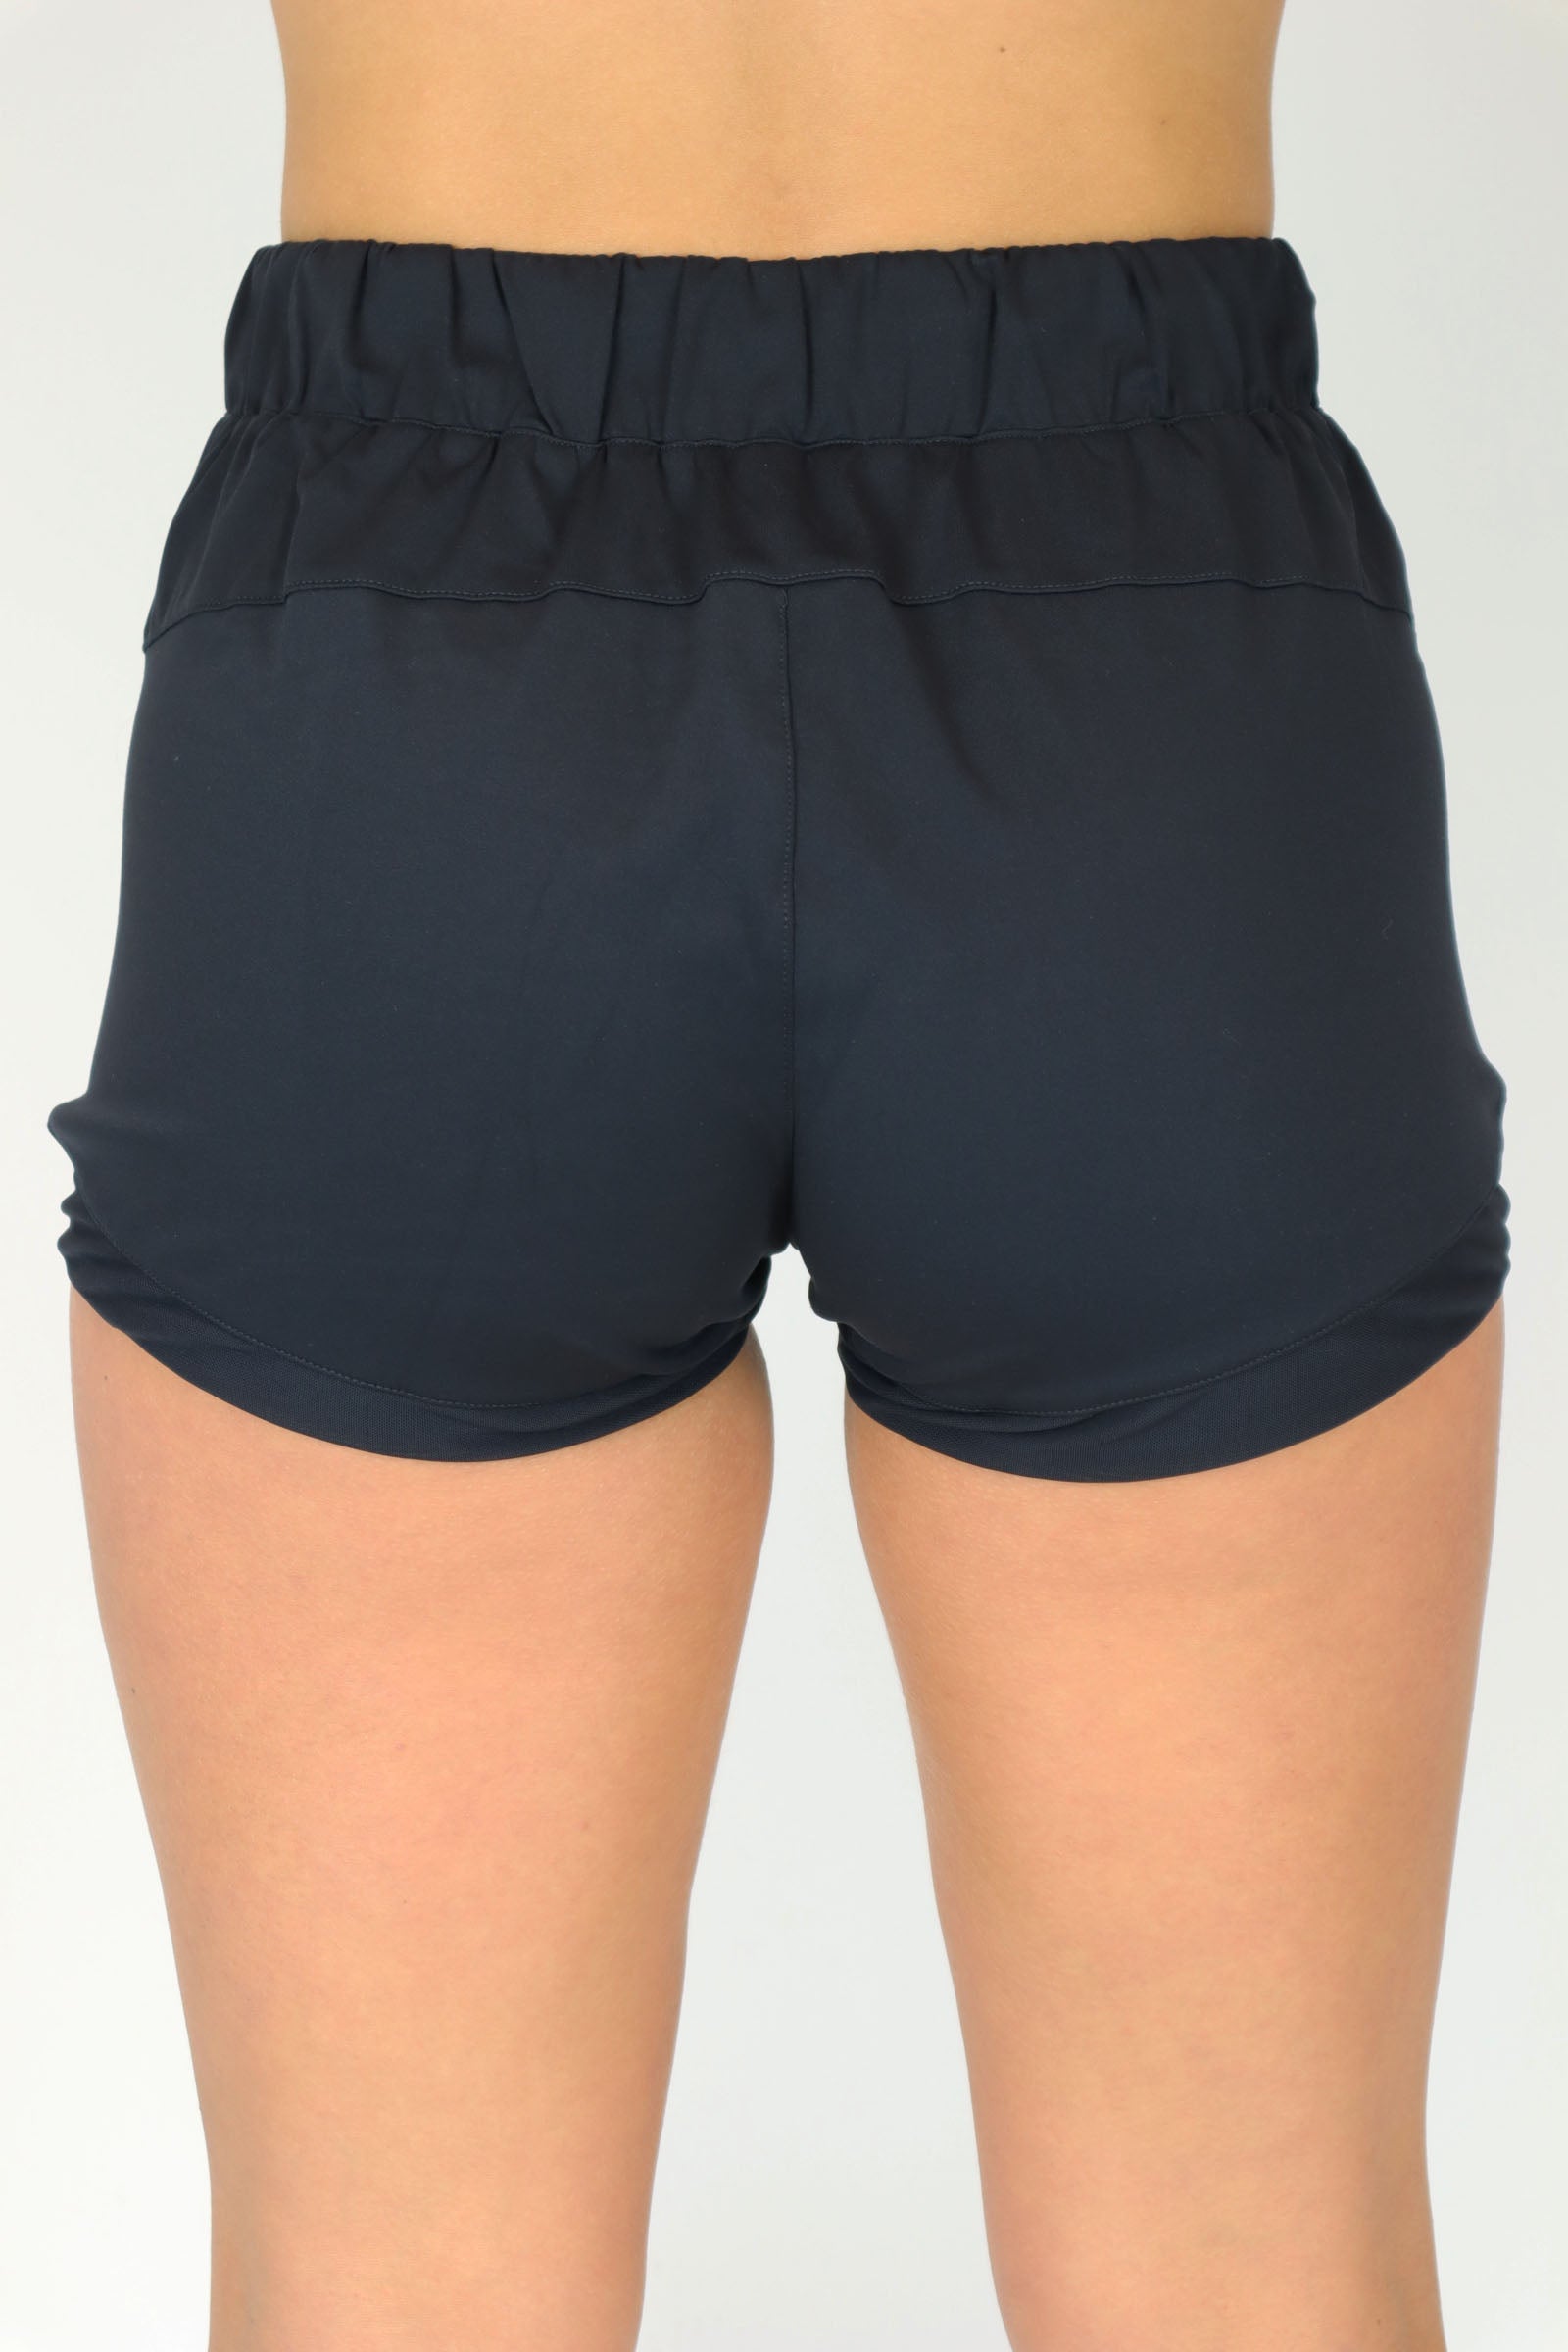 Pantalones cortos moldeadores de primera calidad® – InfiniteLove BCN